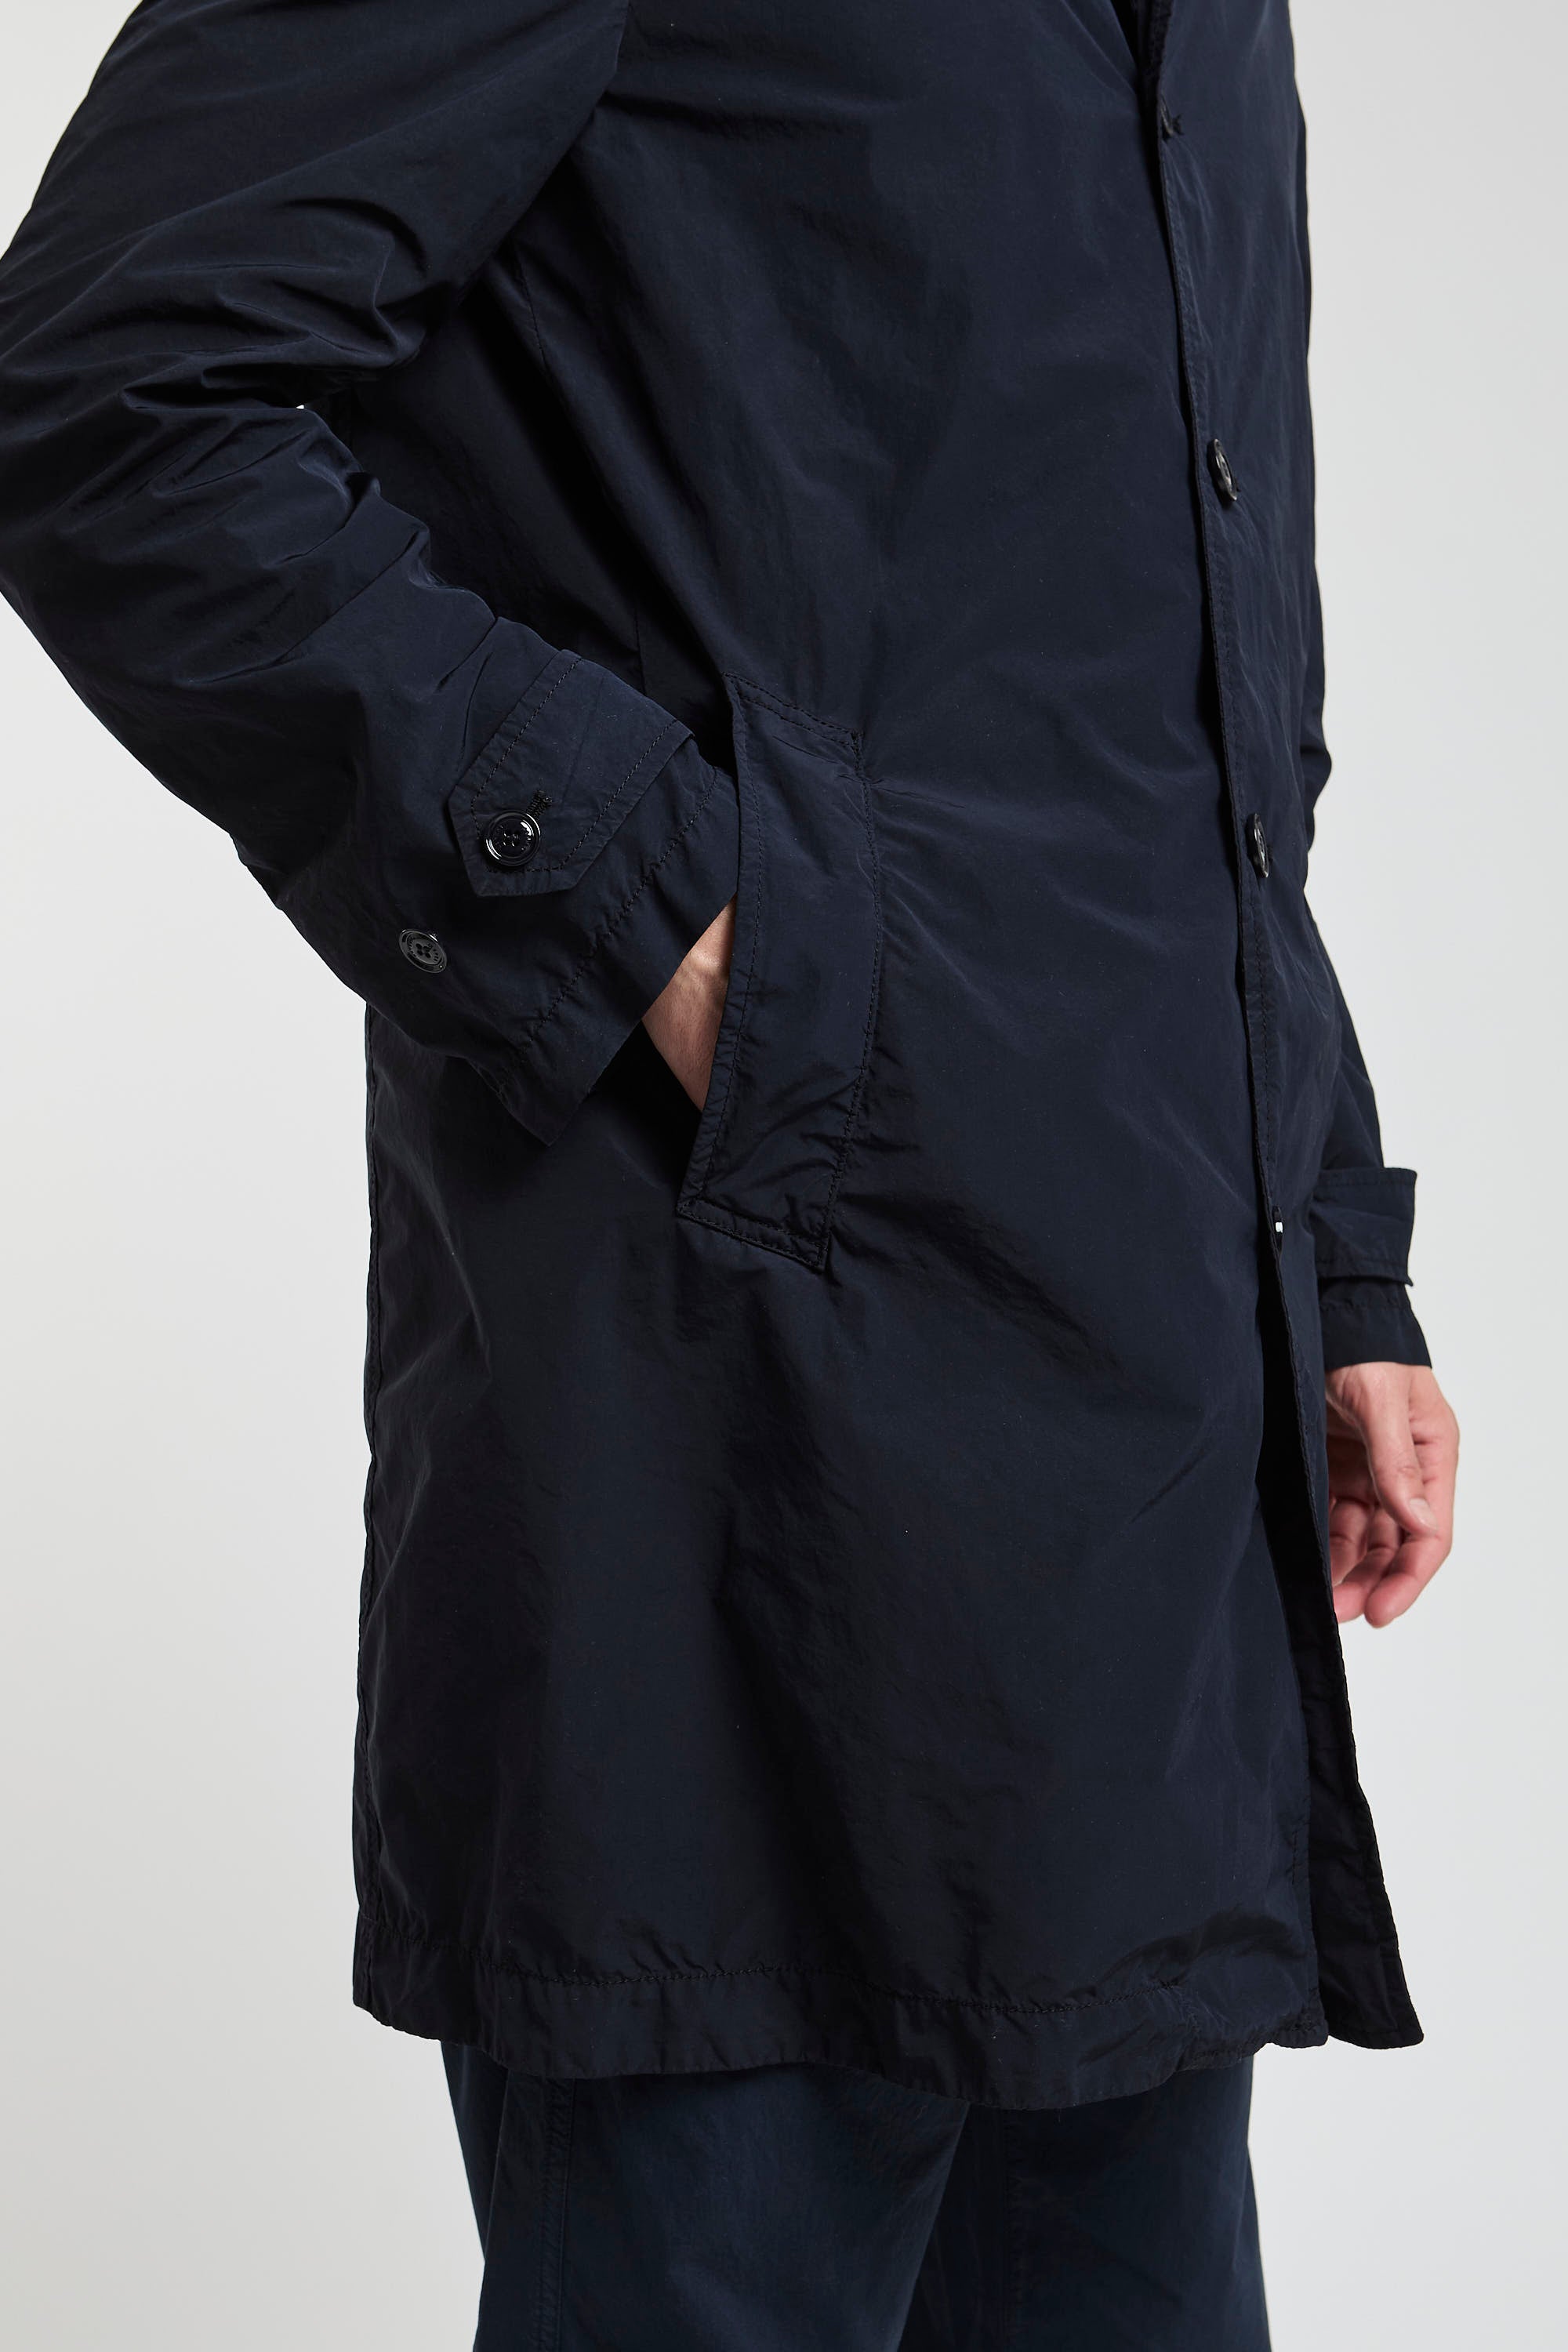 Aspesi Compact Polyester/Nylon Waterproof Jacket in Blue-7